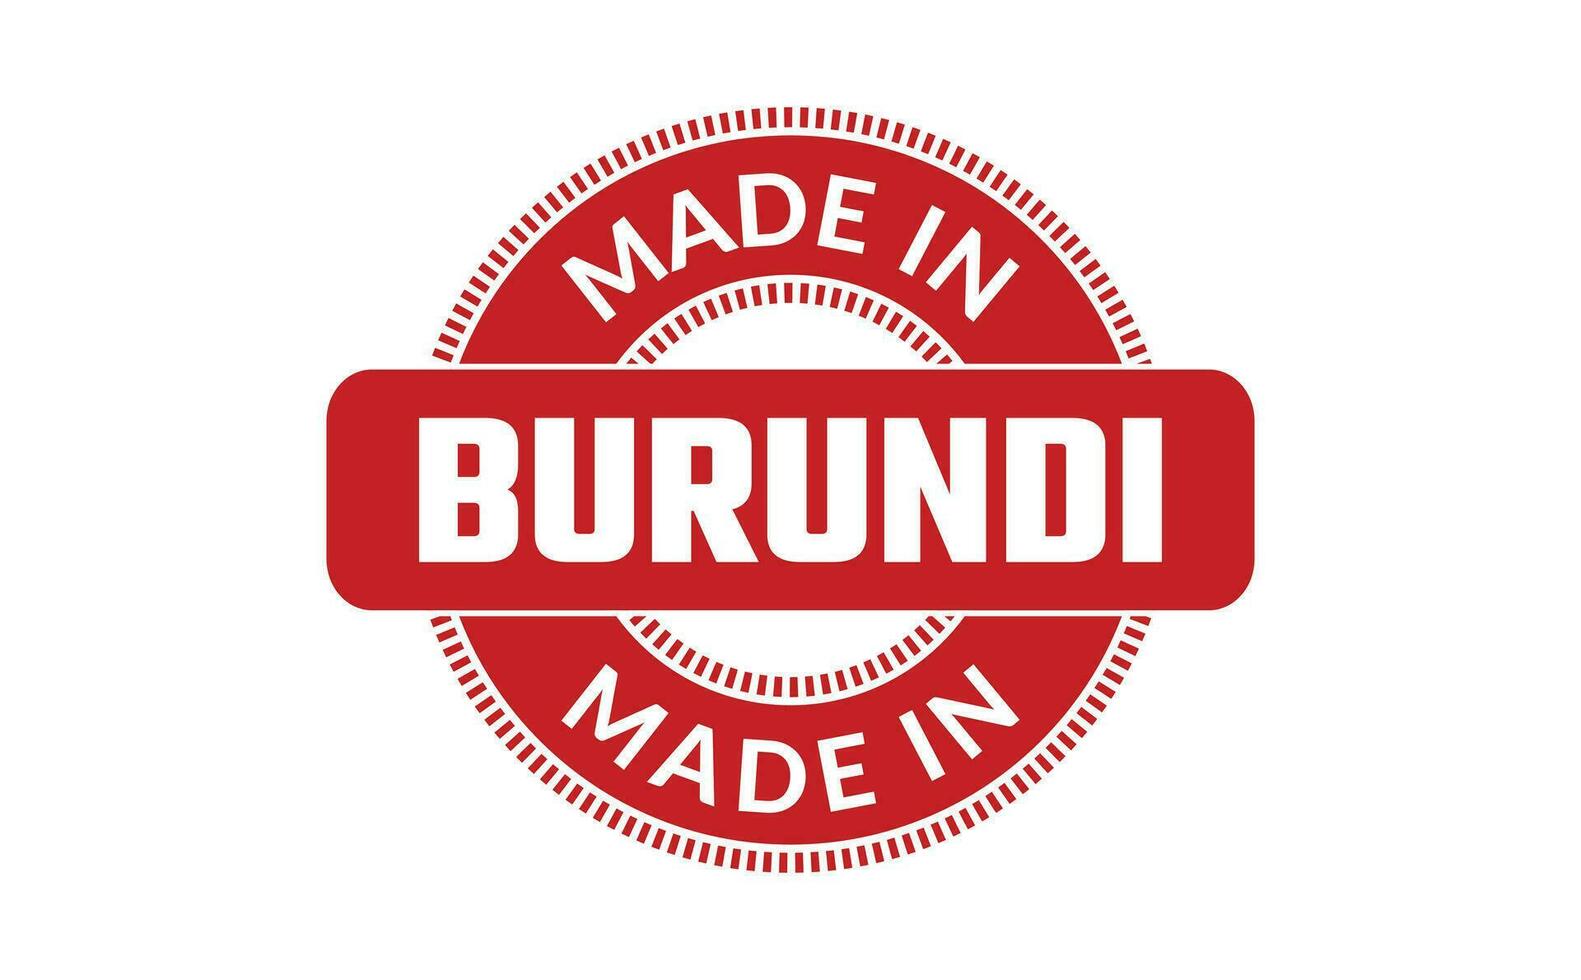 gemacht im Burundi Gummi Briefmarke vektor